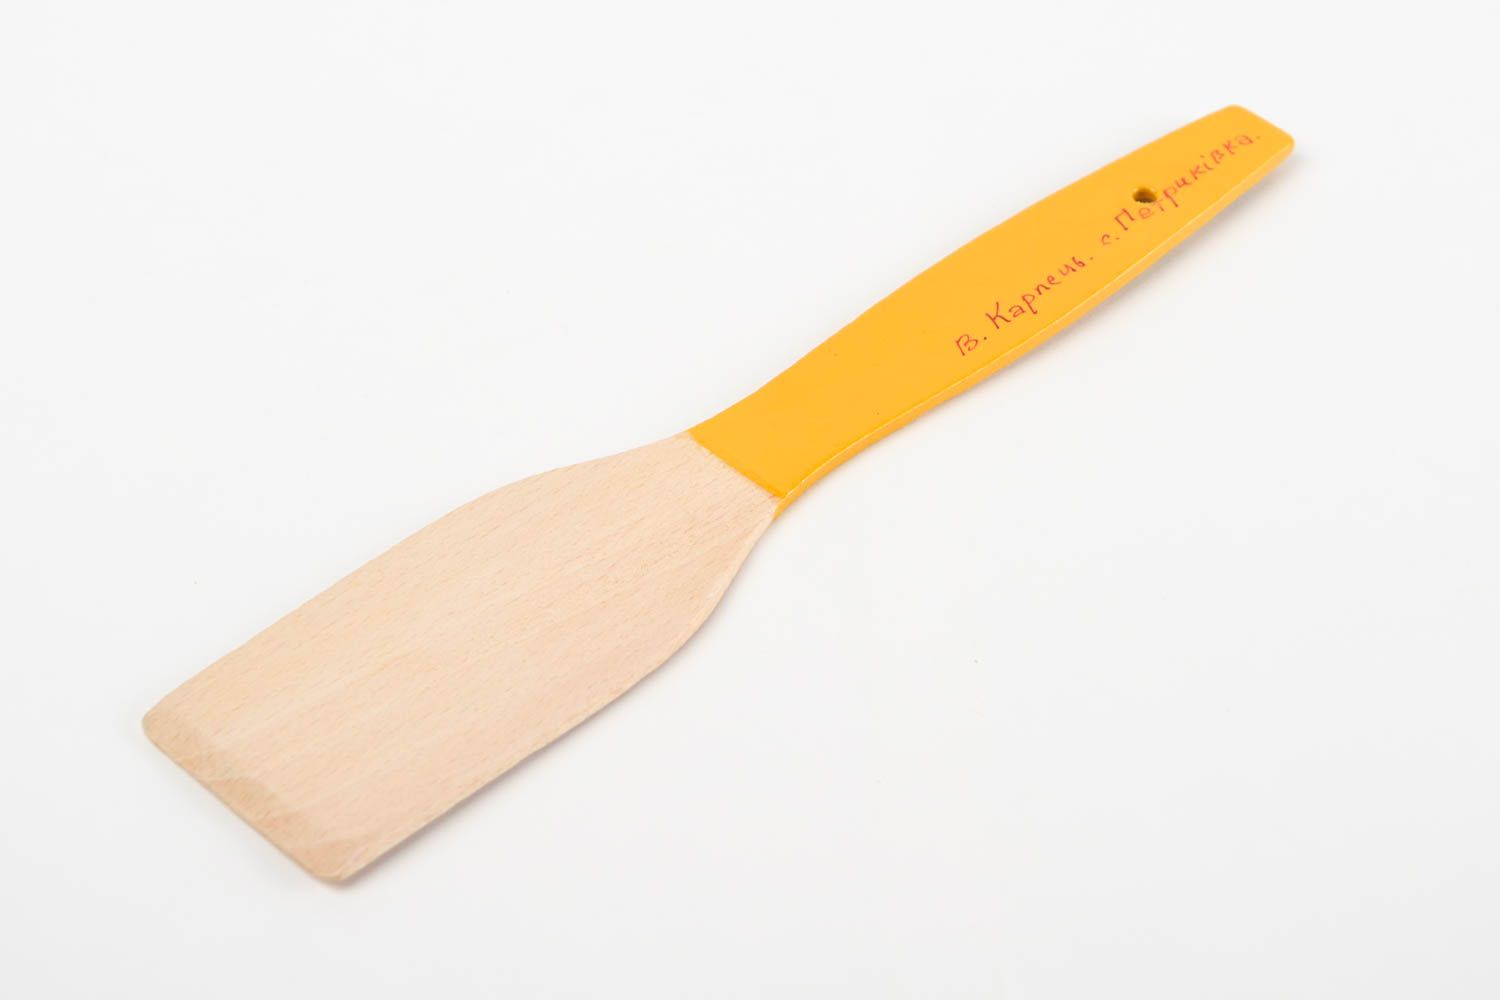 Handmade spatula wooden spatula for kitchen decor ideas unusual gift for women photo 5